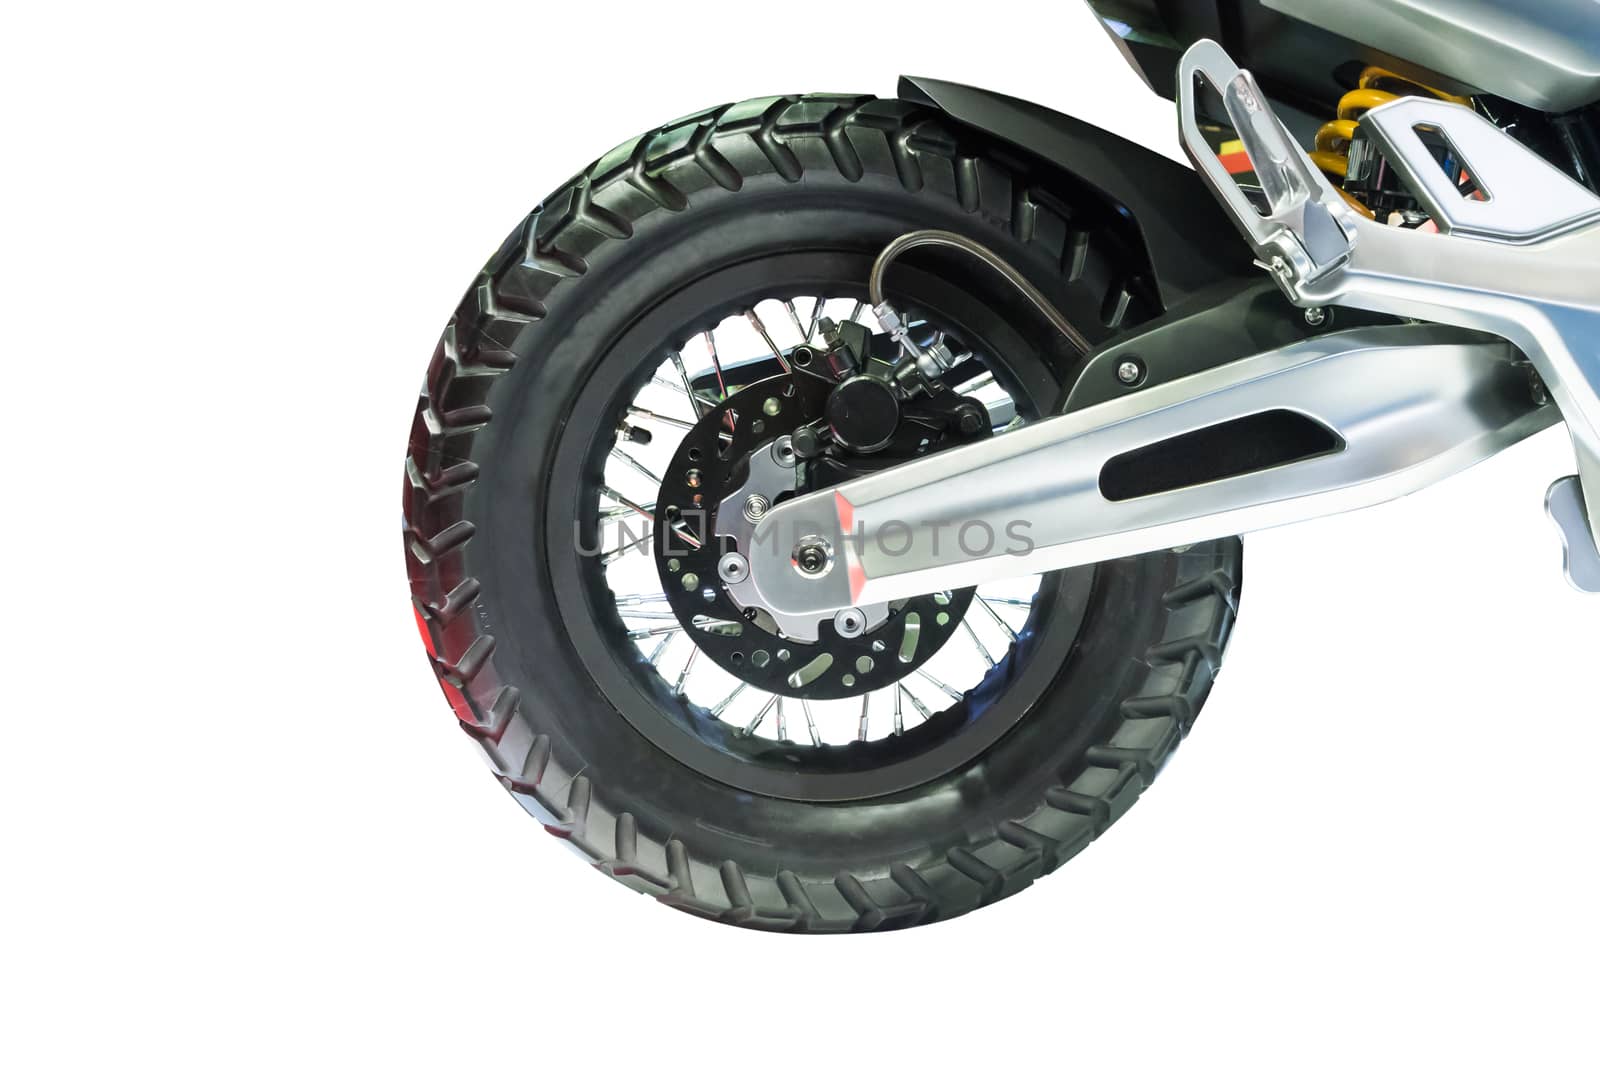 Motorcycle Motocross wheels isolated on white background.